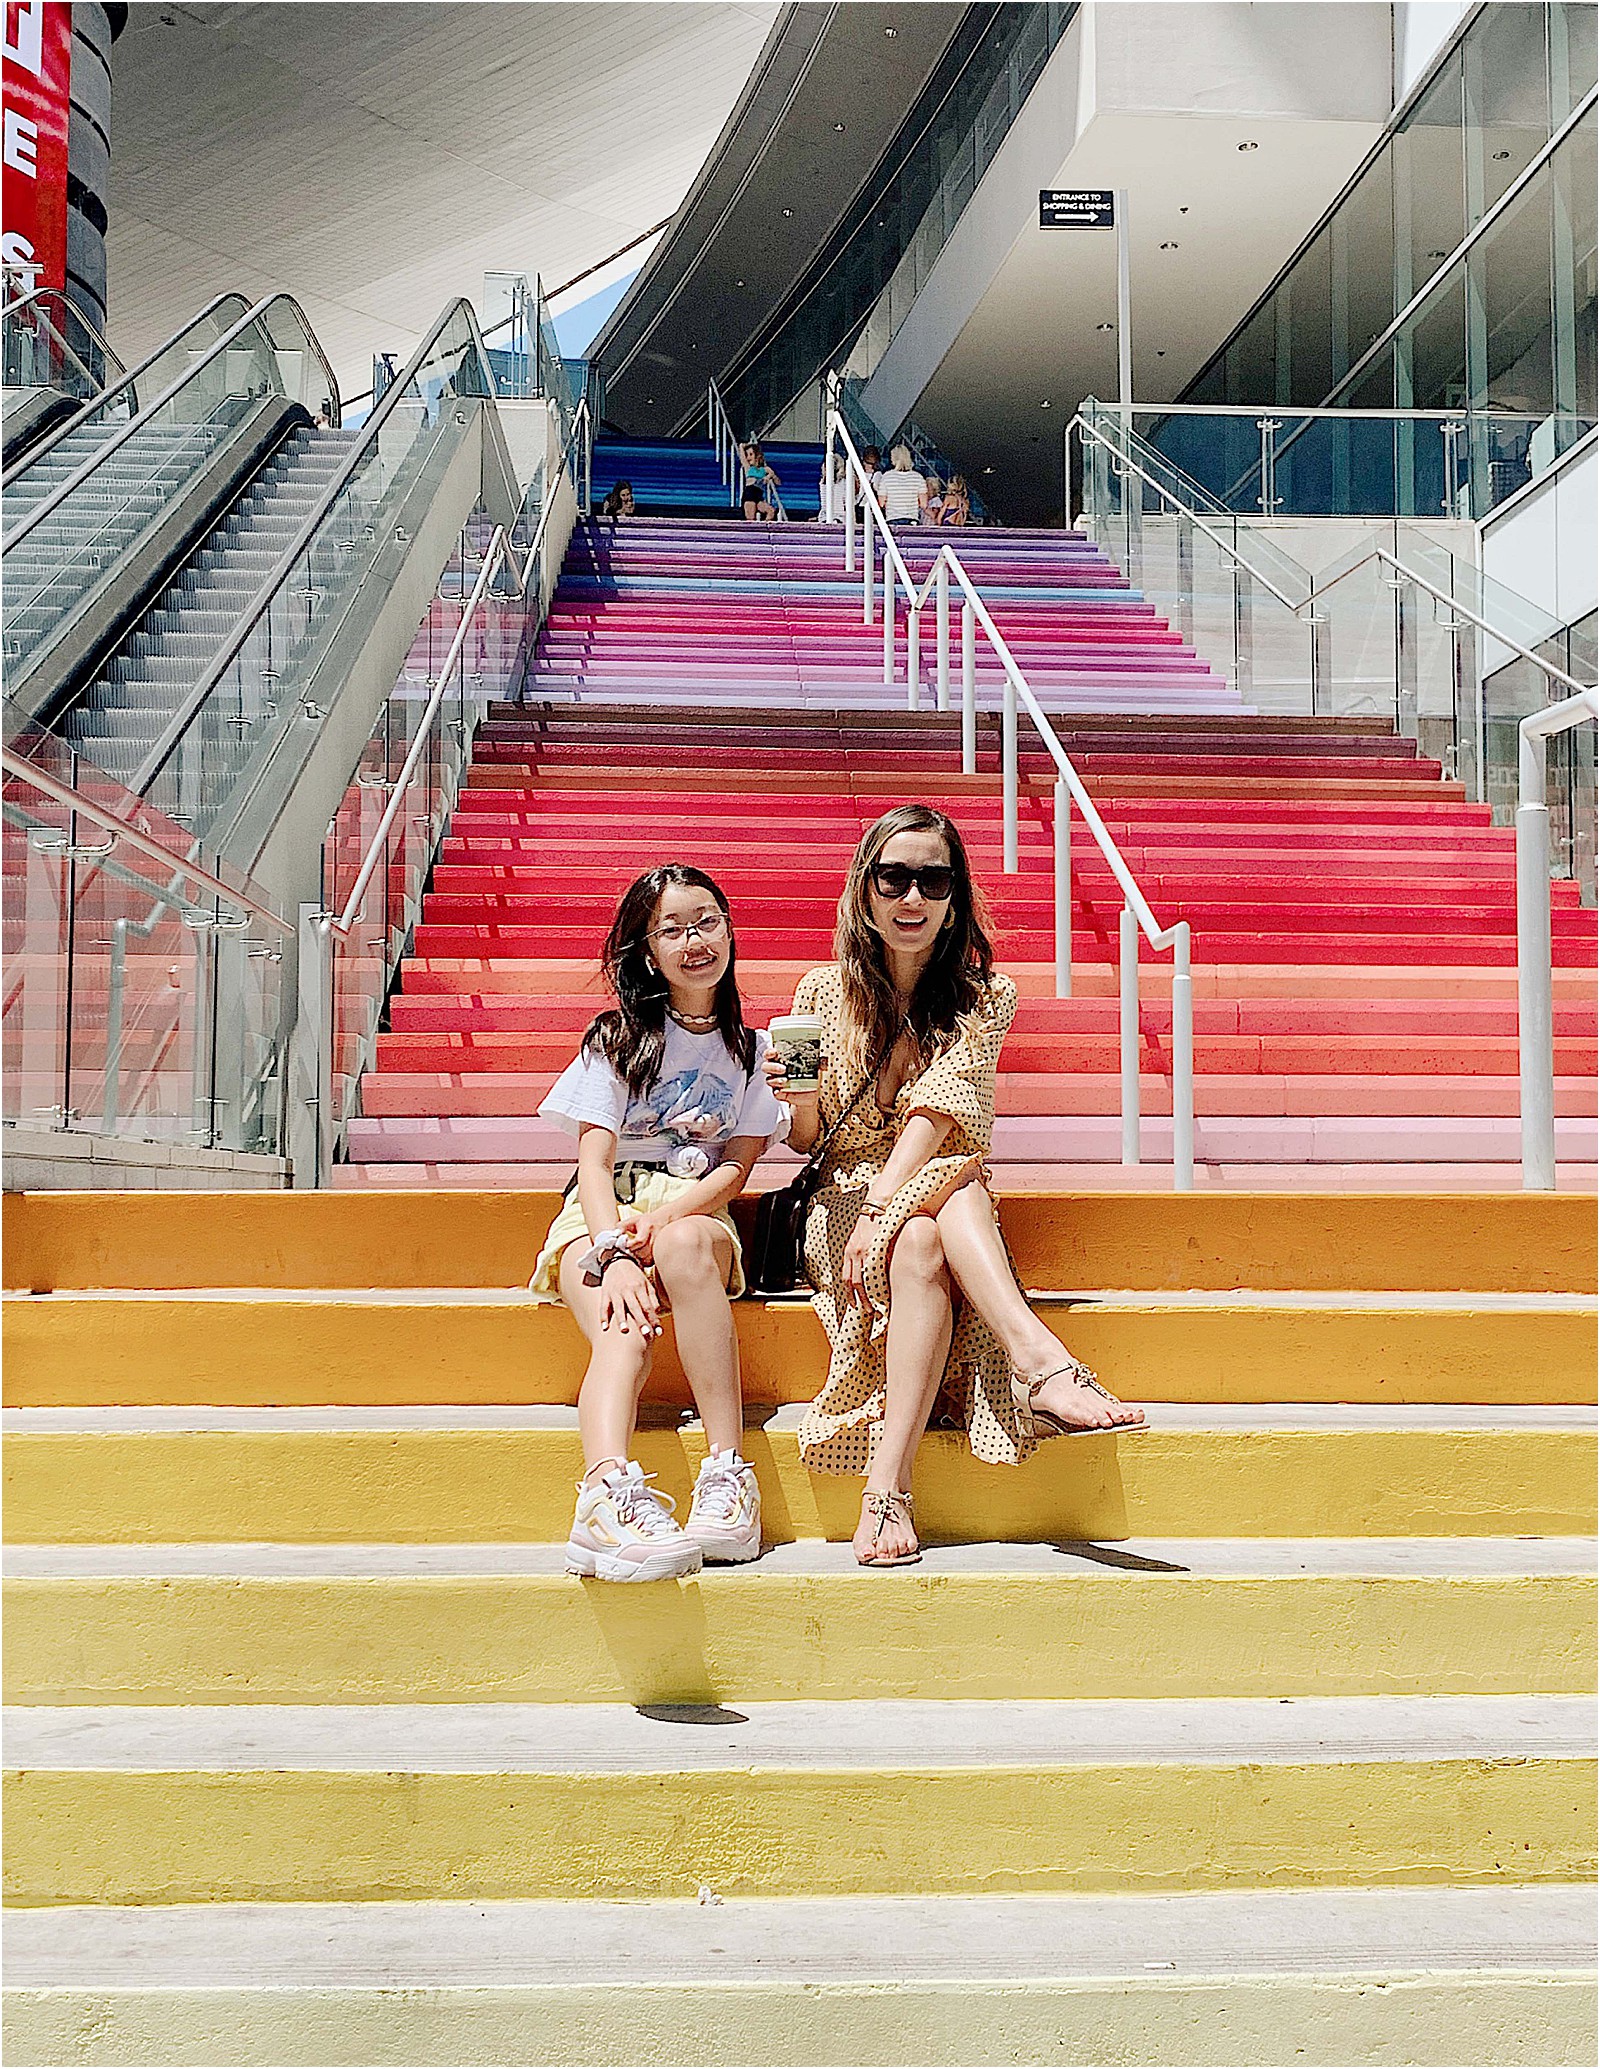 Fashion Show Mall rainbow stairs